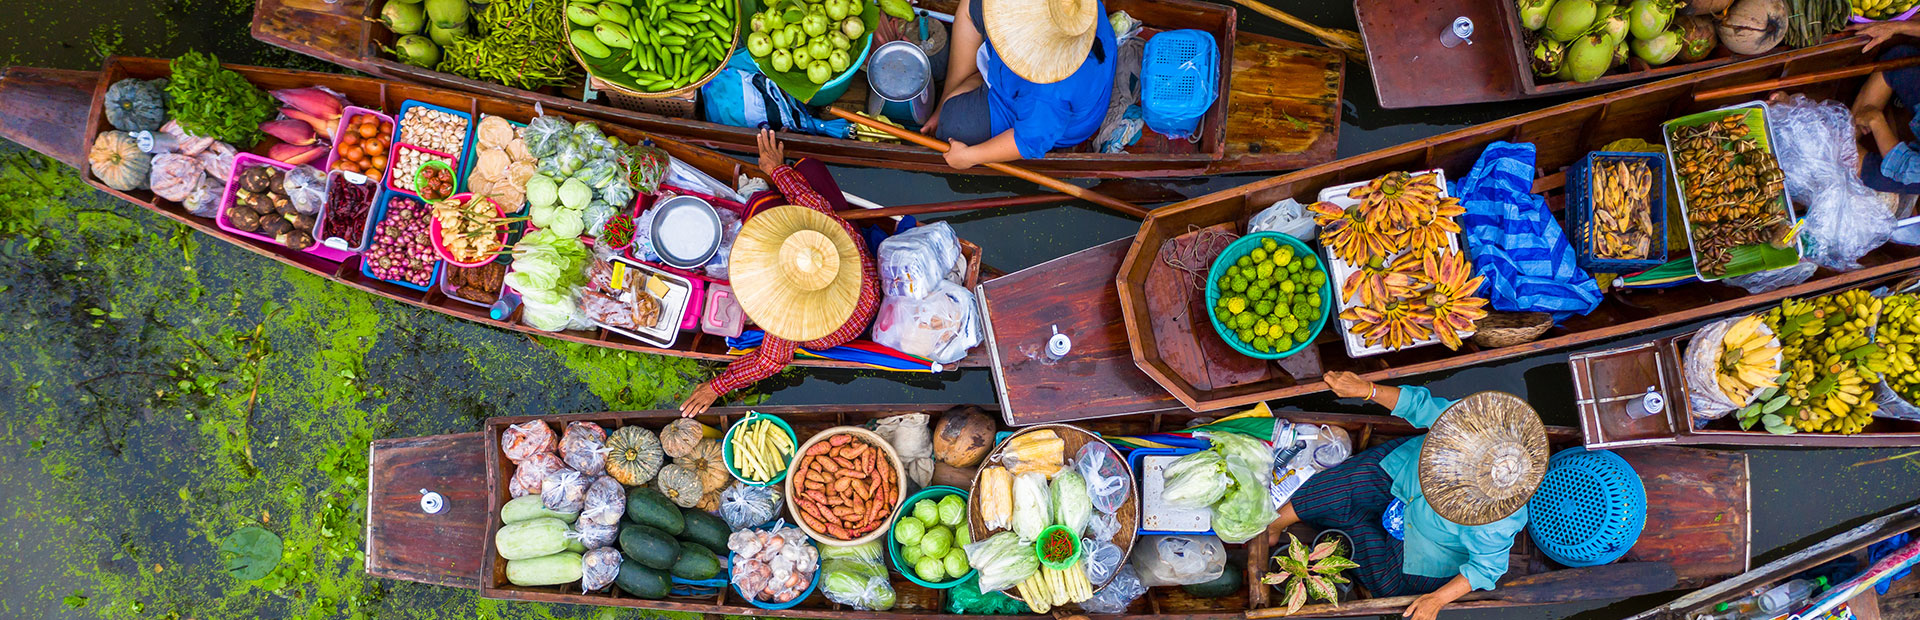 Vegetable vendors on boat